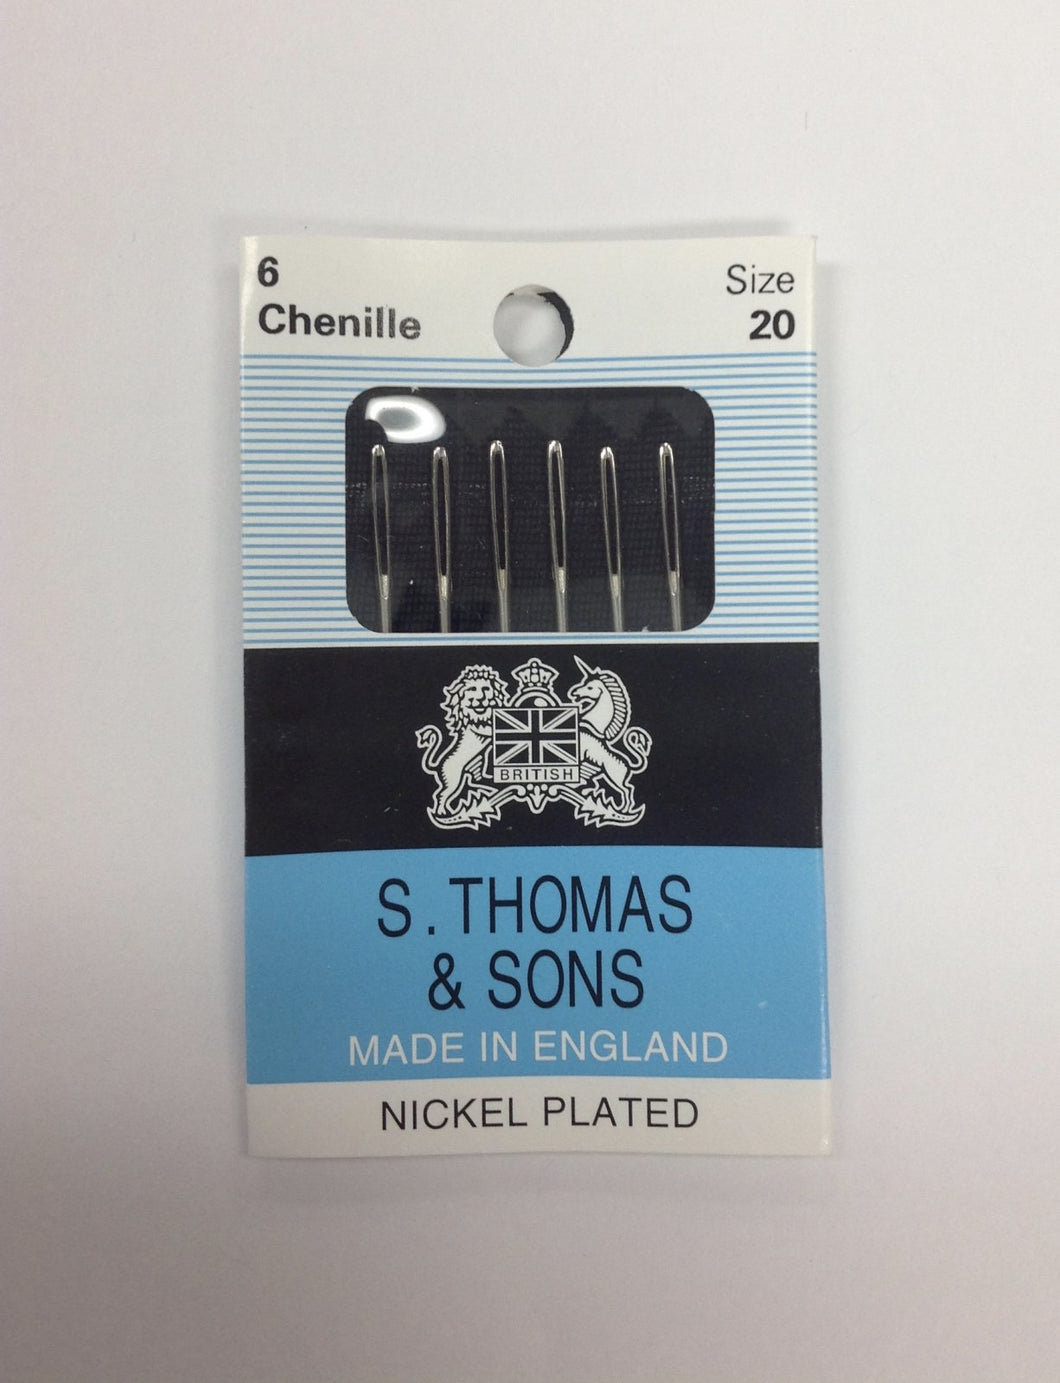 S. Thomas Chenille Needles